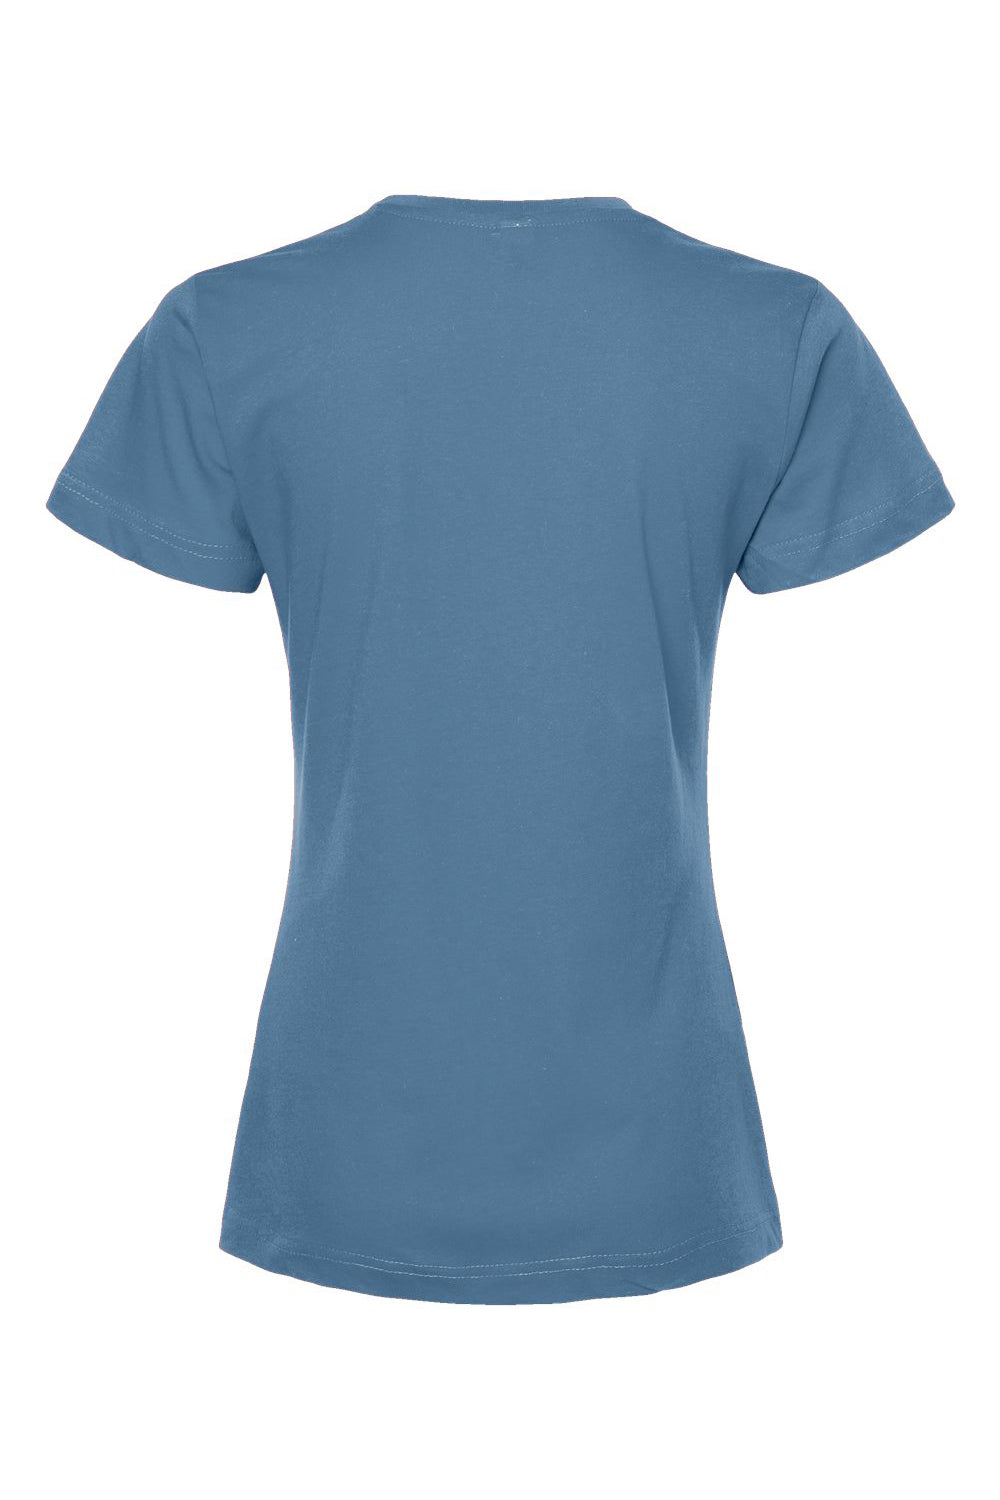 Tultex 216 Womens Fine Jersey Classic Fit Short Sleeve Crewneck T-Shirt Slate Blue Flat Back